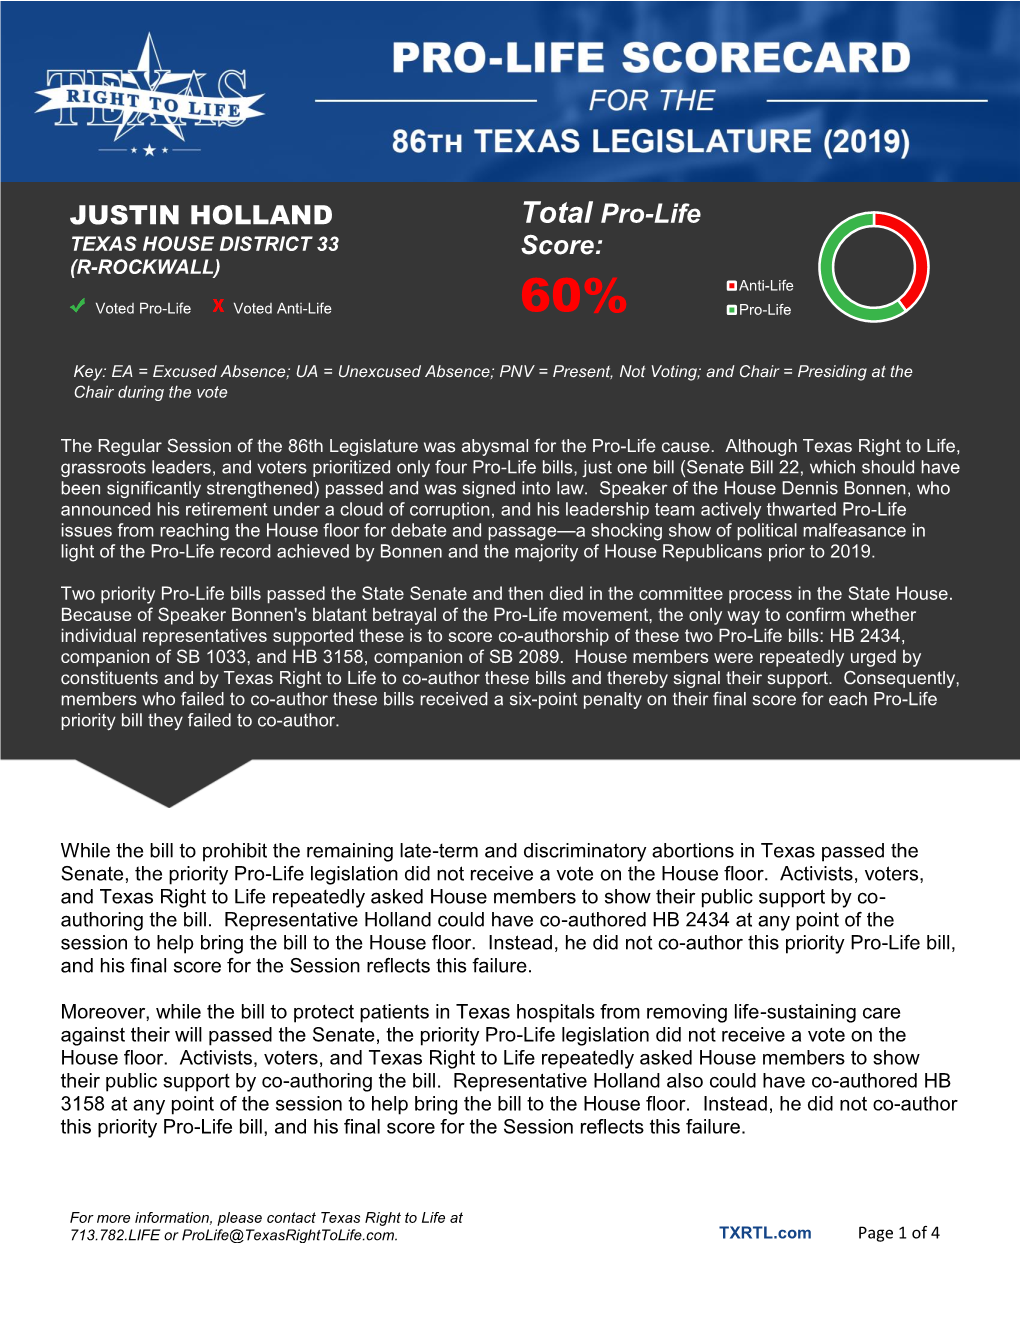 JUSTIN HOLLAND Total Pro-Life Score